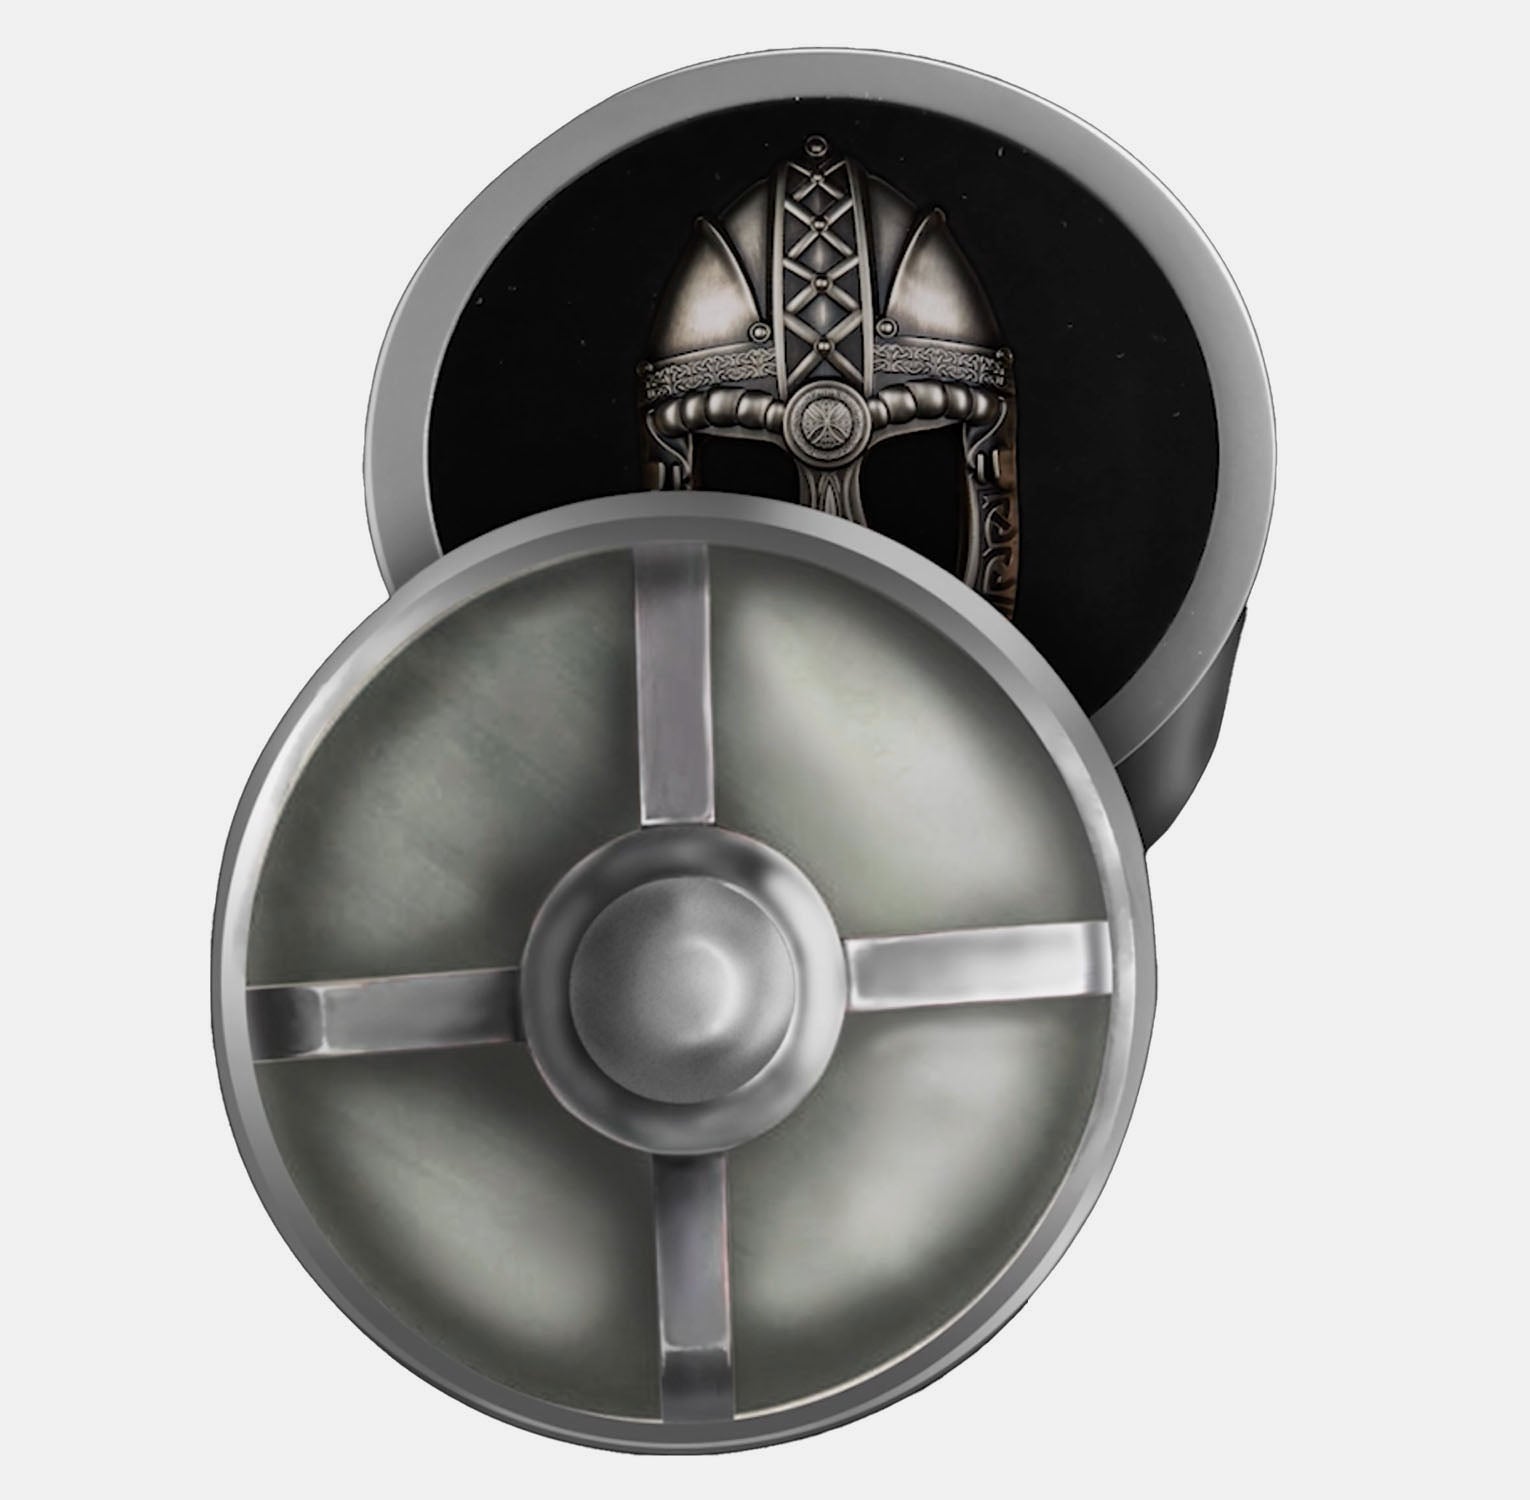 Viking Helmet 300g Silver Coin